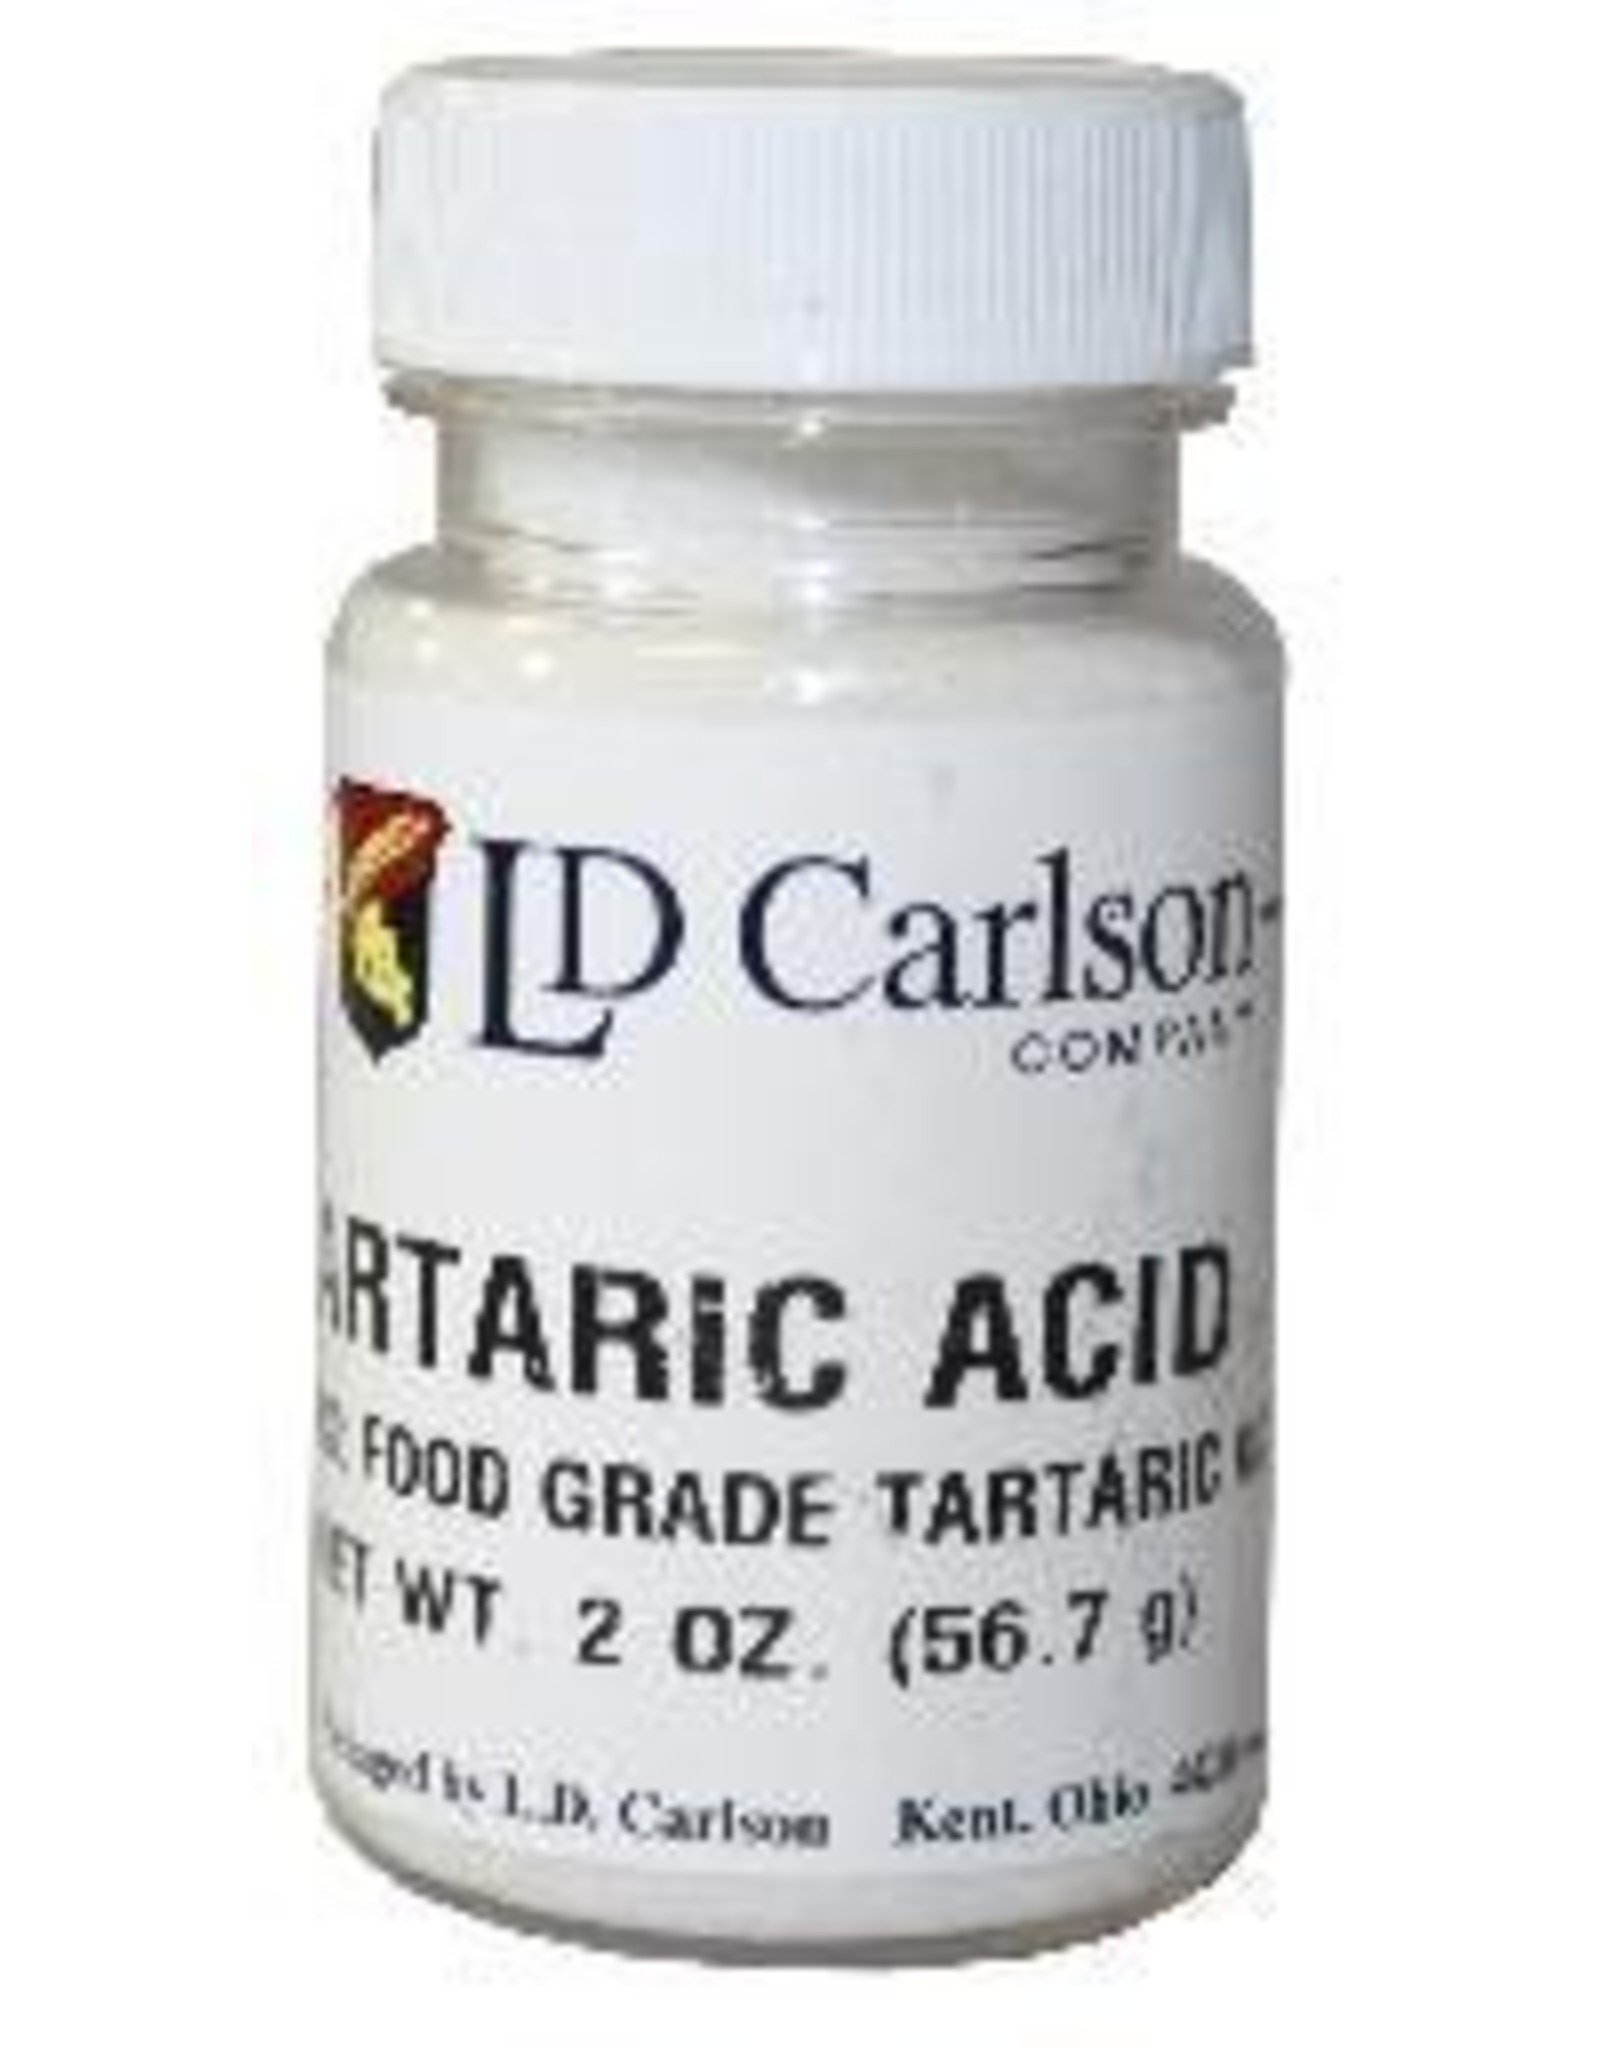 tartaric acid in wine